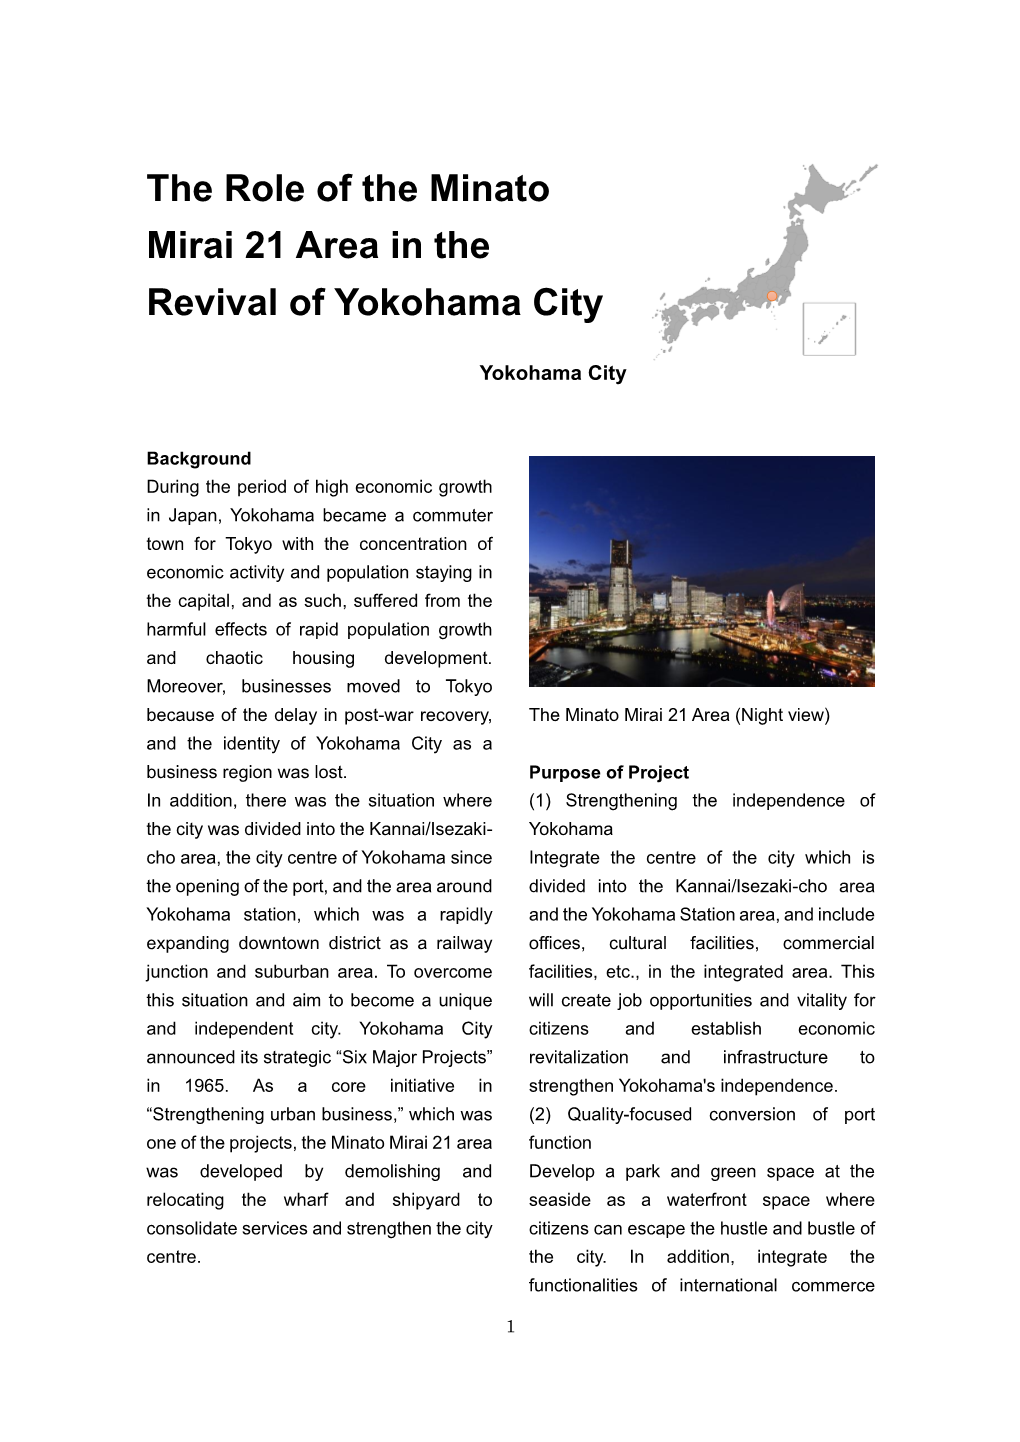 The Role of the Minato Mirai 21 Area in the Revival of Yokohama City